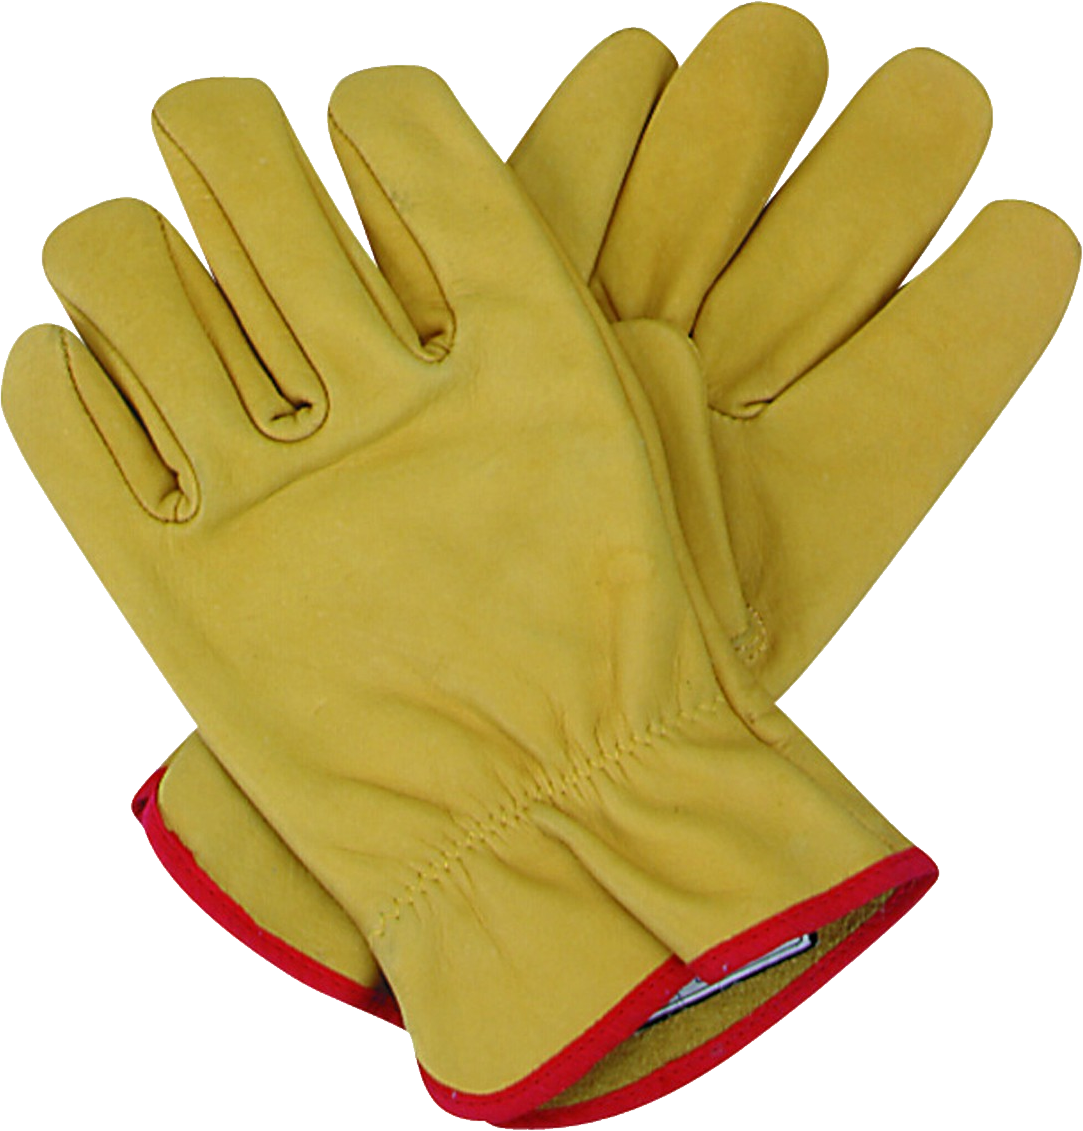 Gloves Png Image - Gloves, Transparent background PNG HD thumbnail